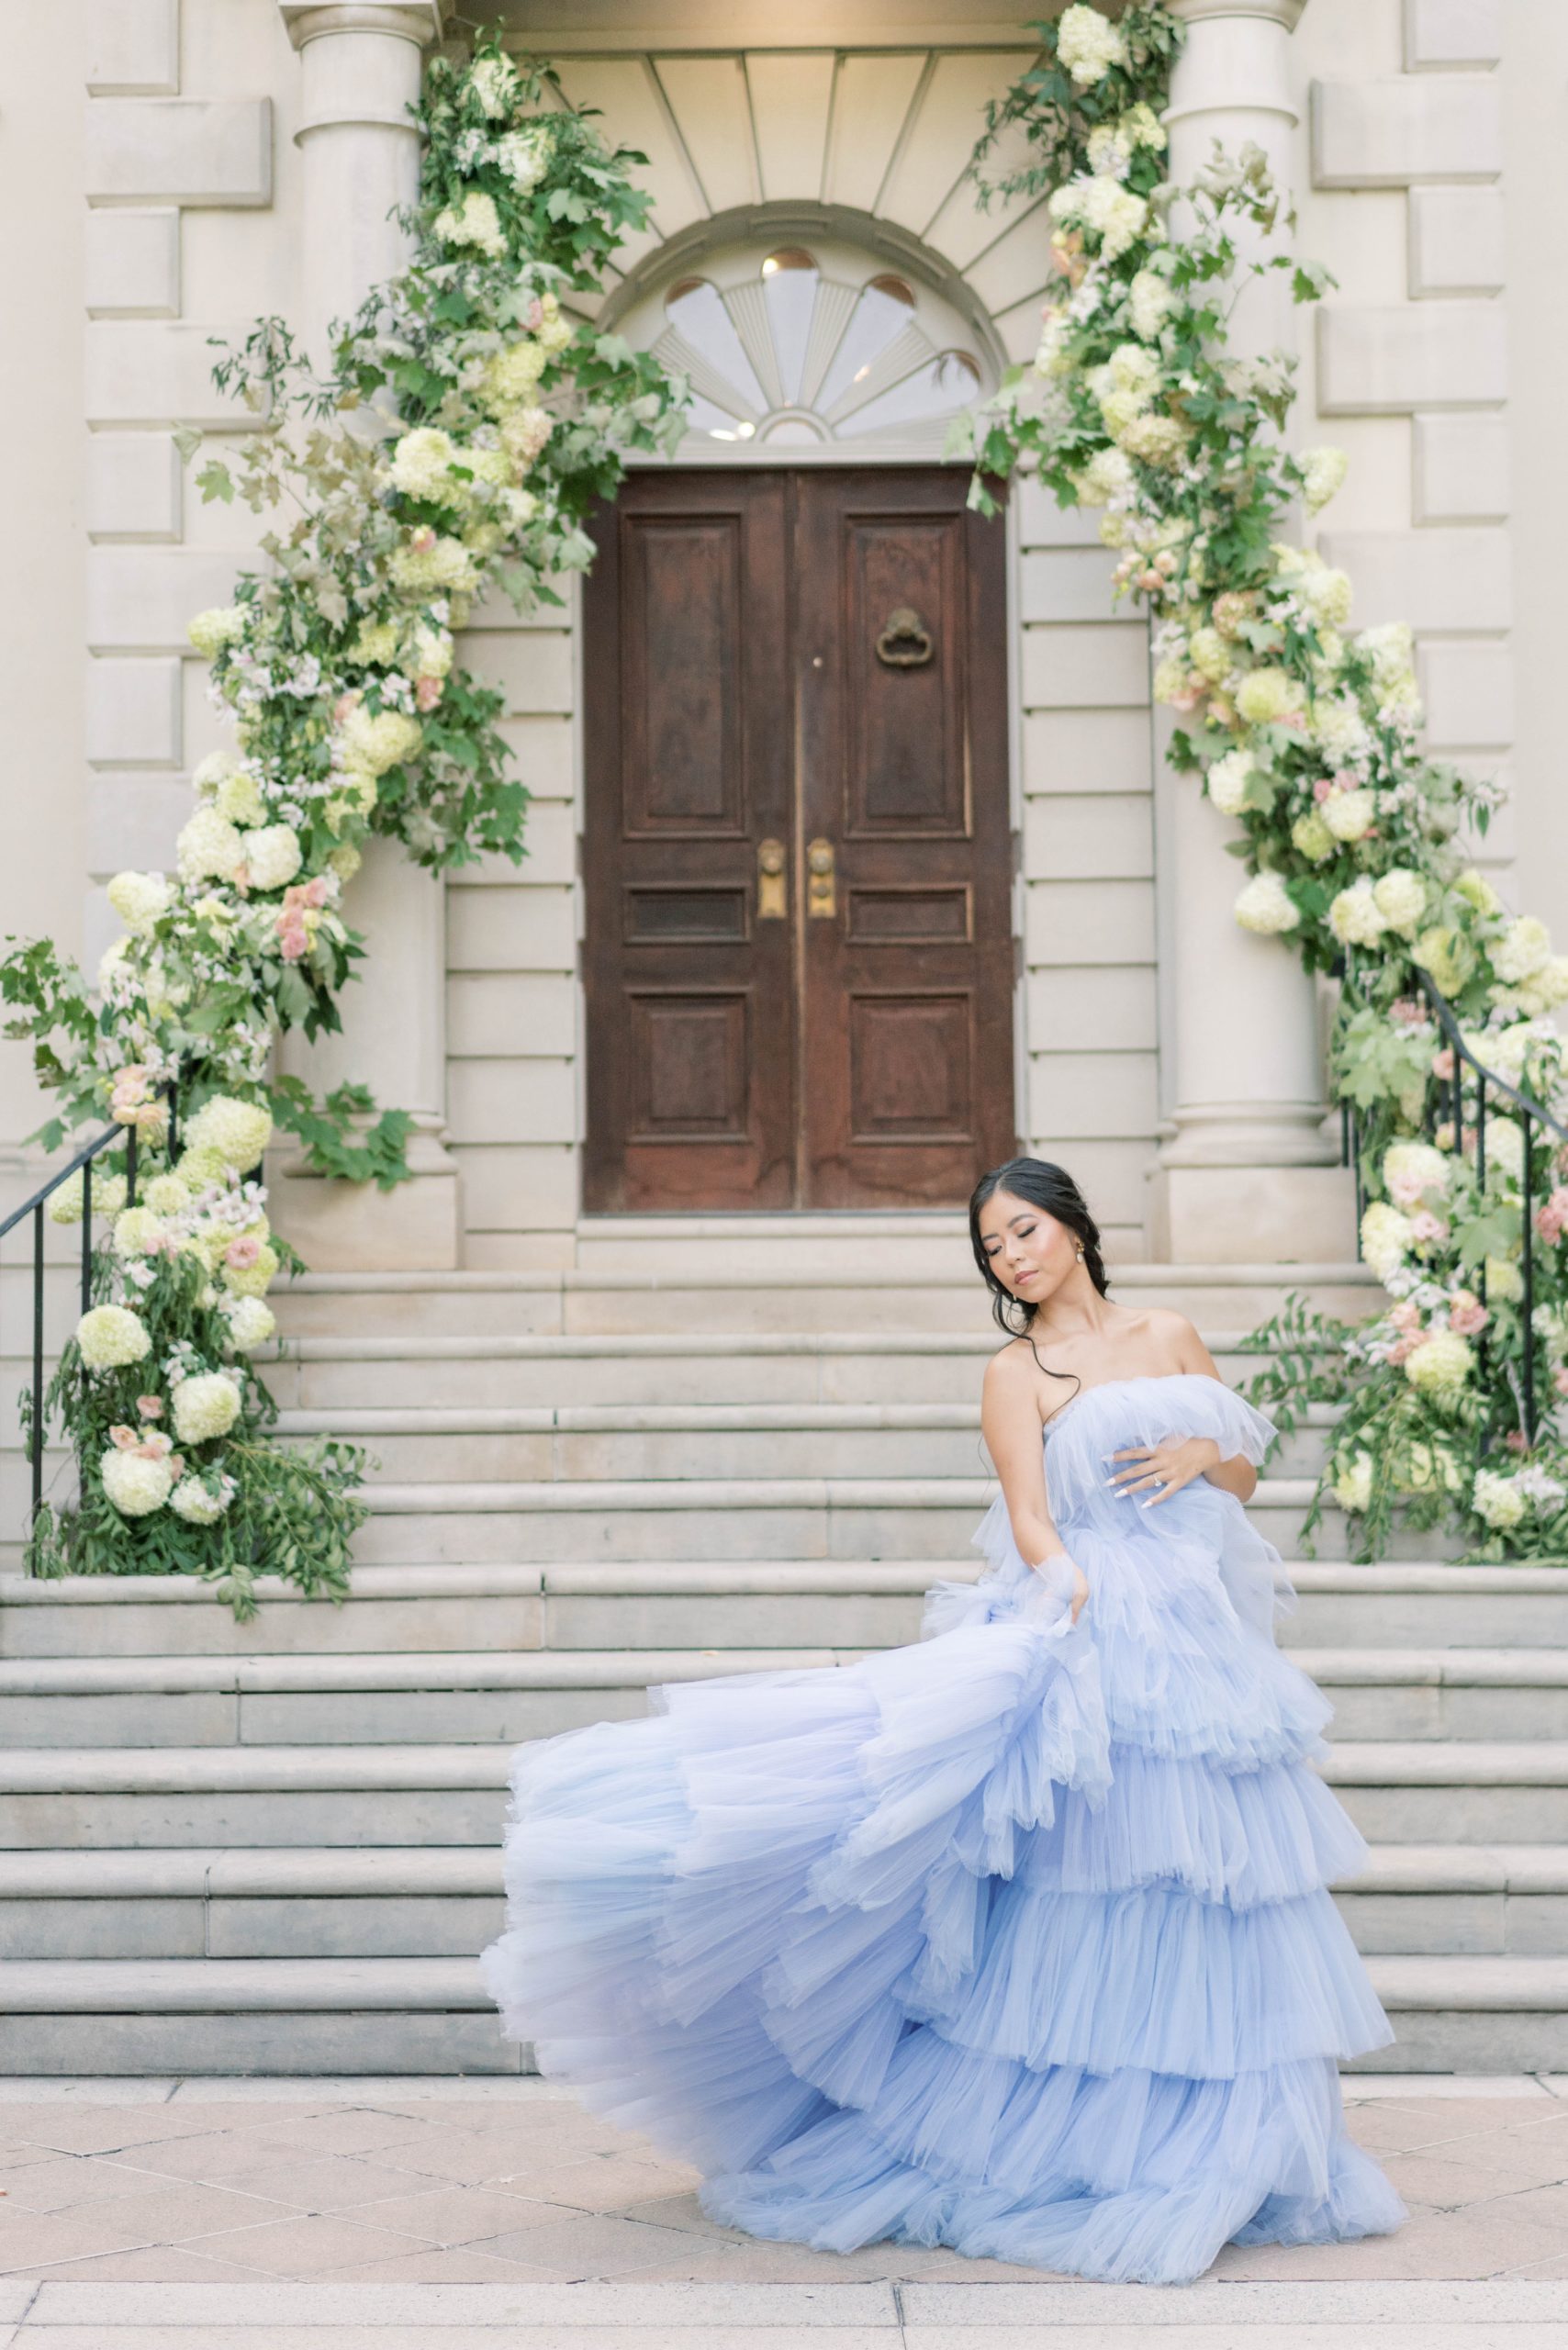 An editorial wedding gown photoshoot at Great Marsh Estate in Bealeton, VA.